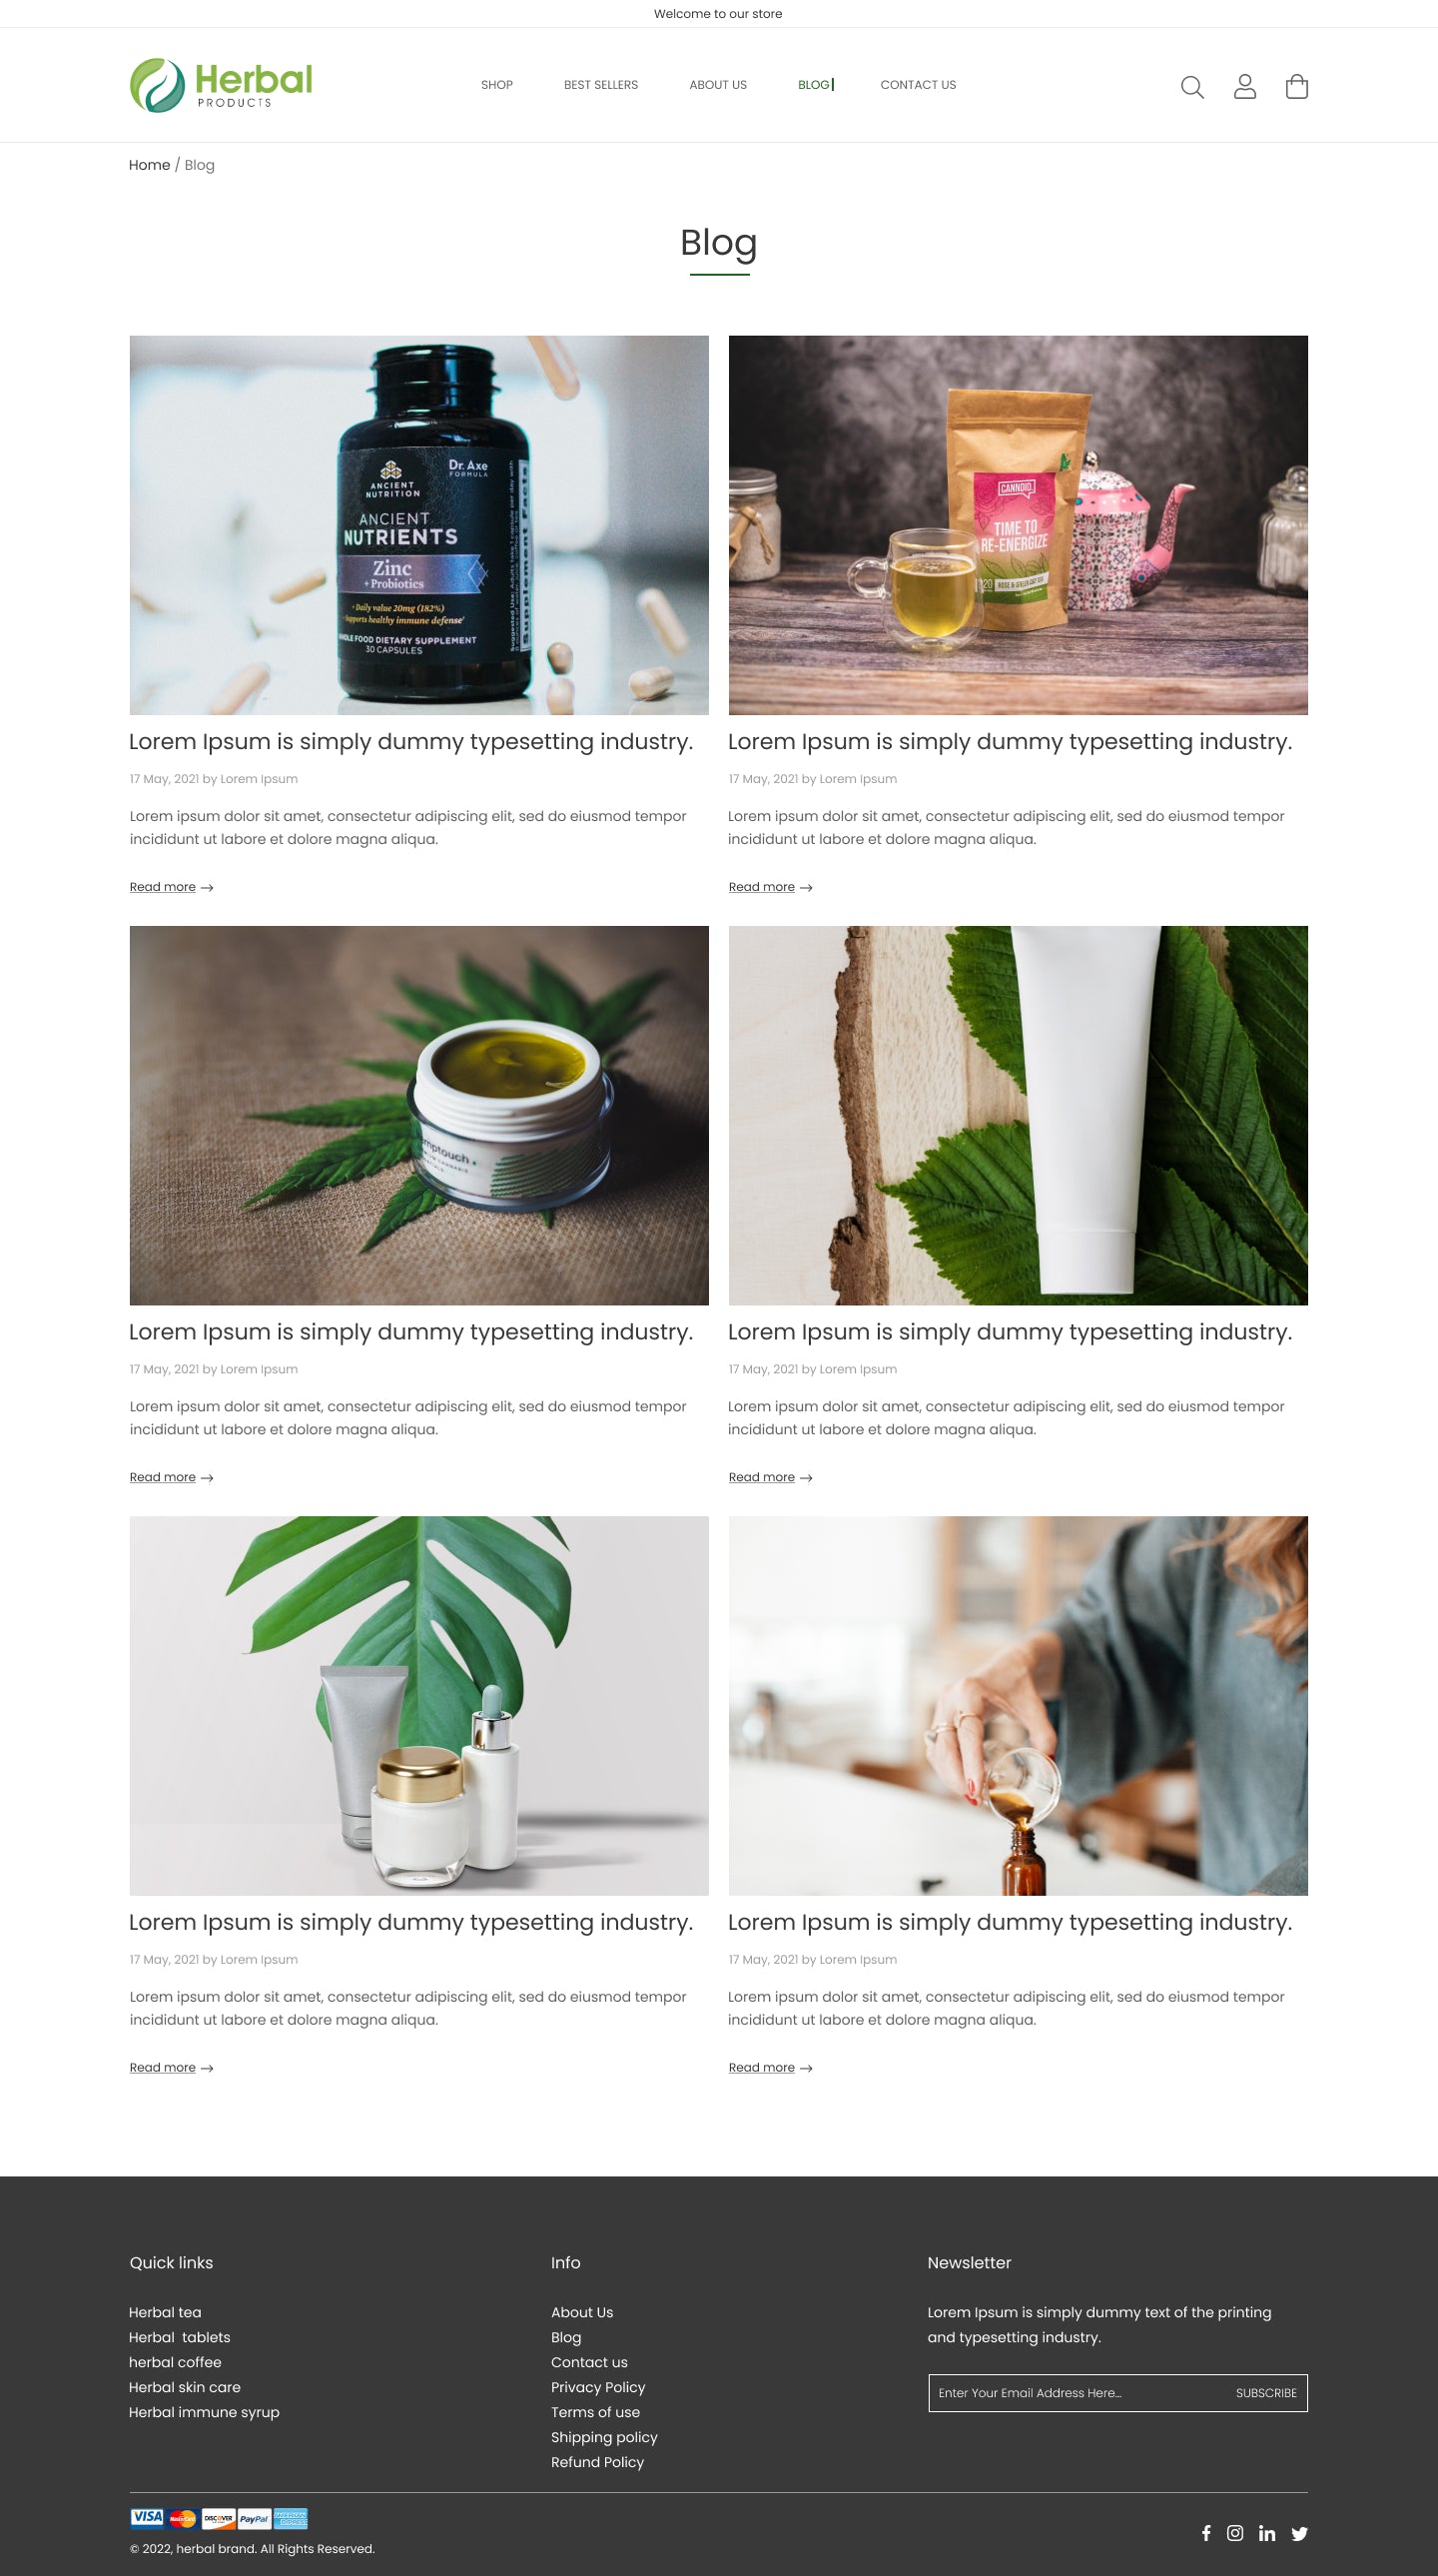 D-Herbal Blog Page